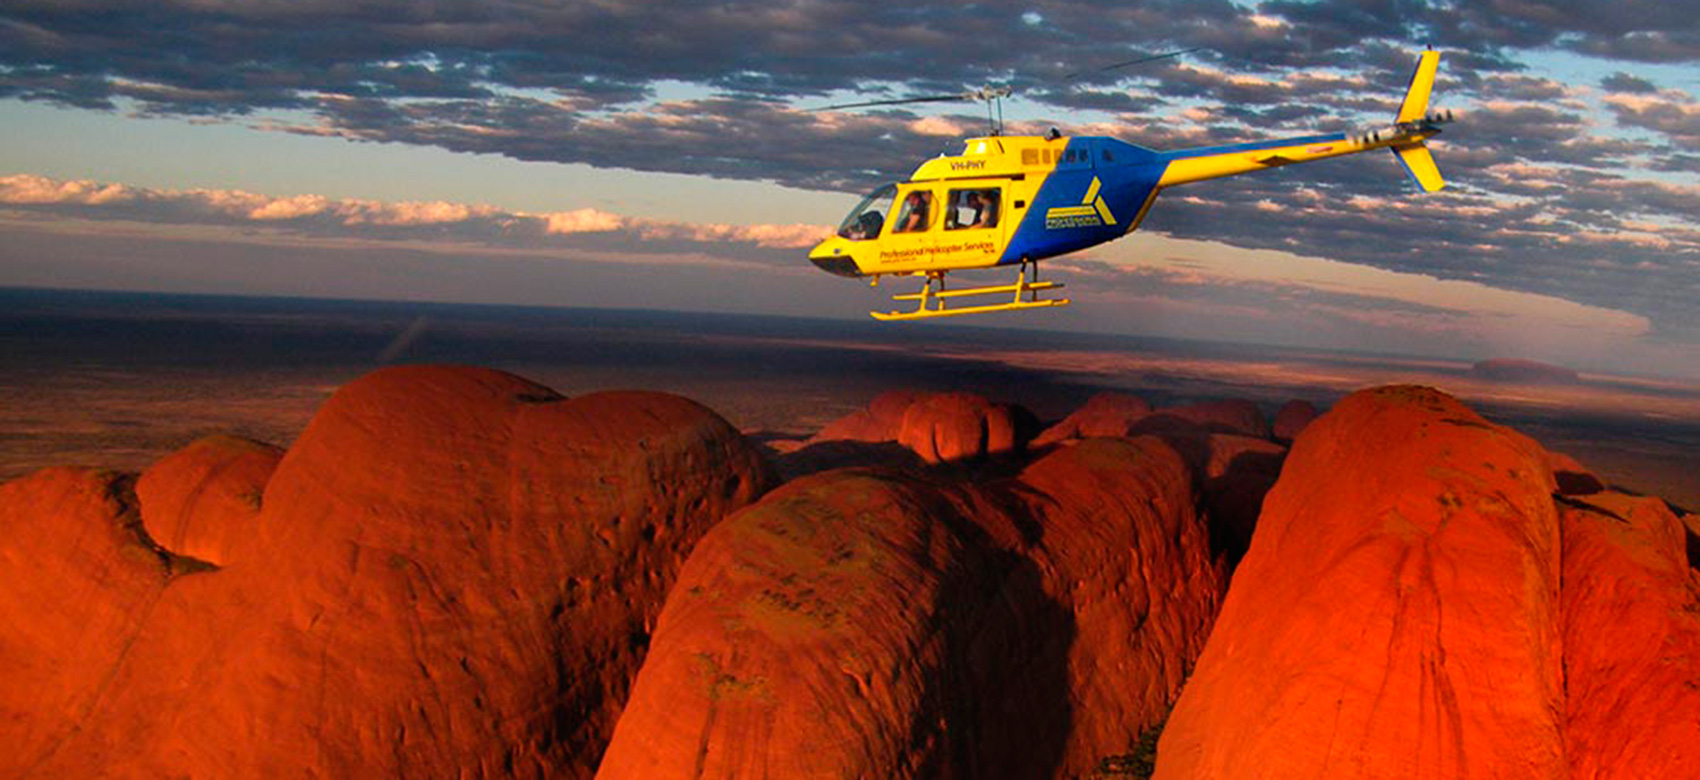 Pacotes para Austrália - Passeios Uluru